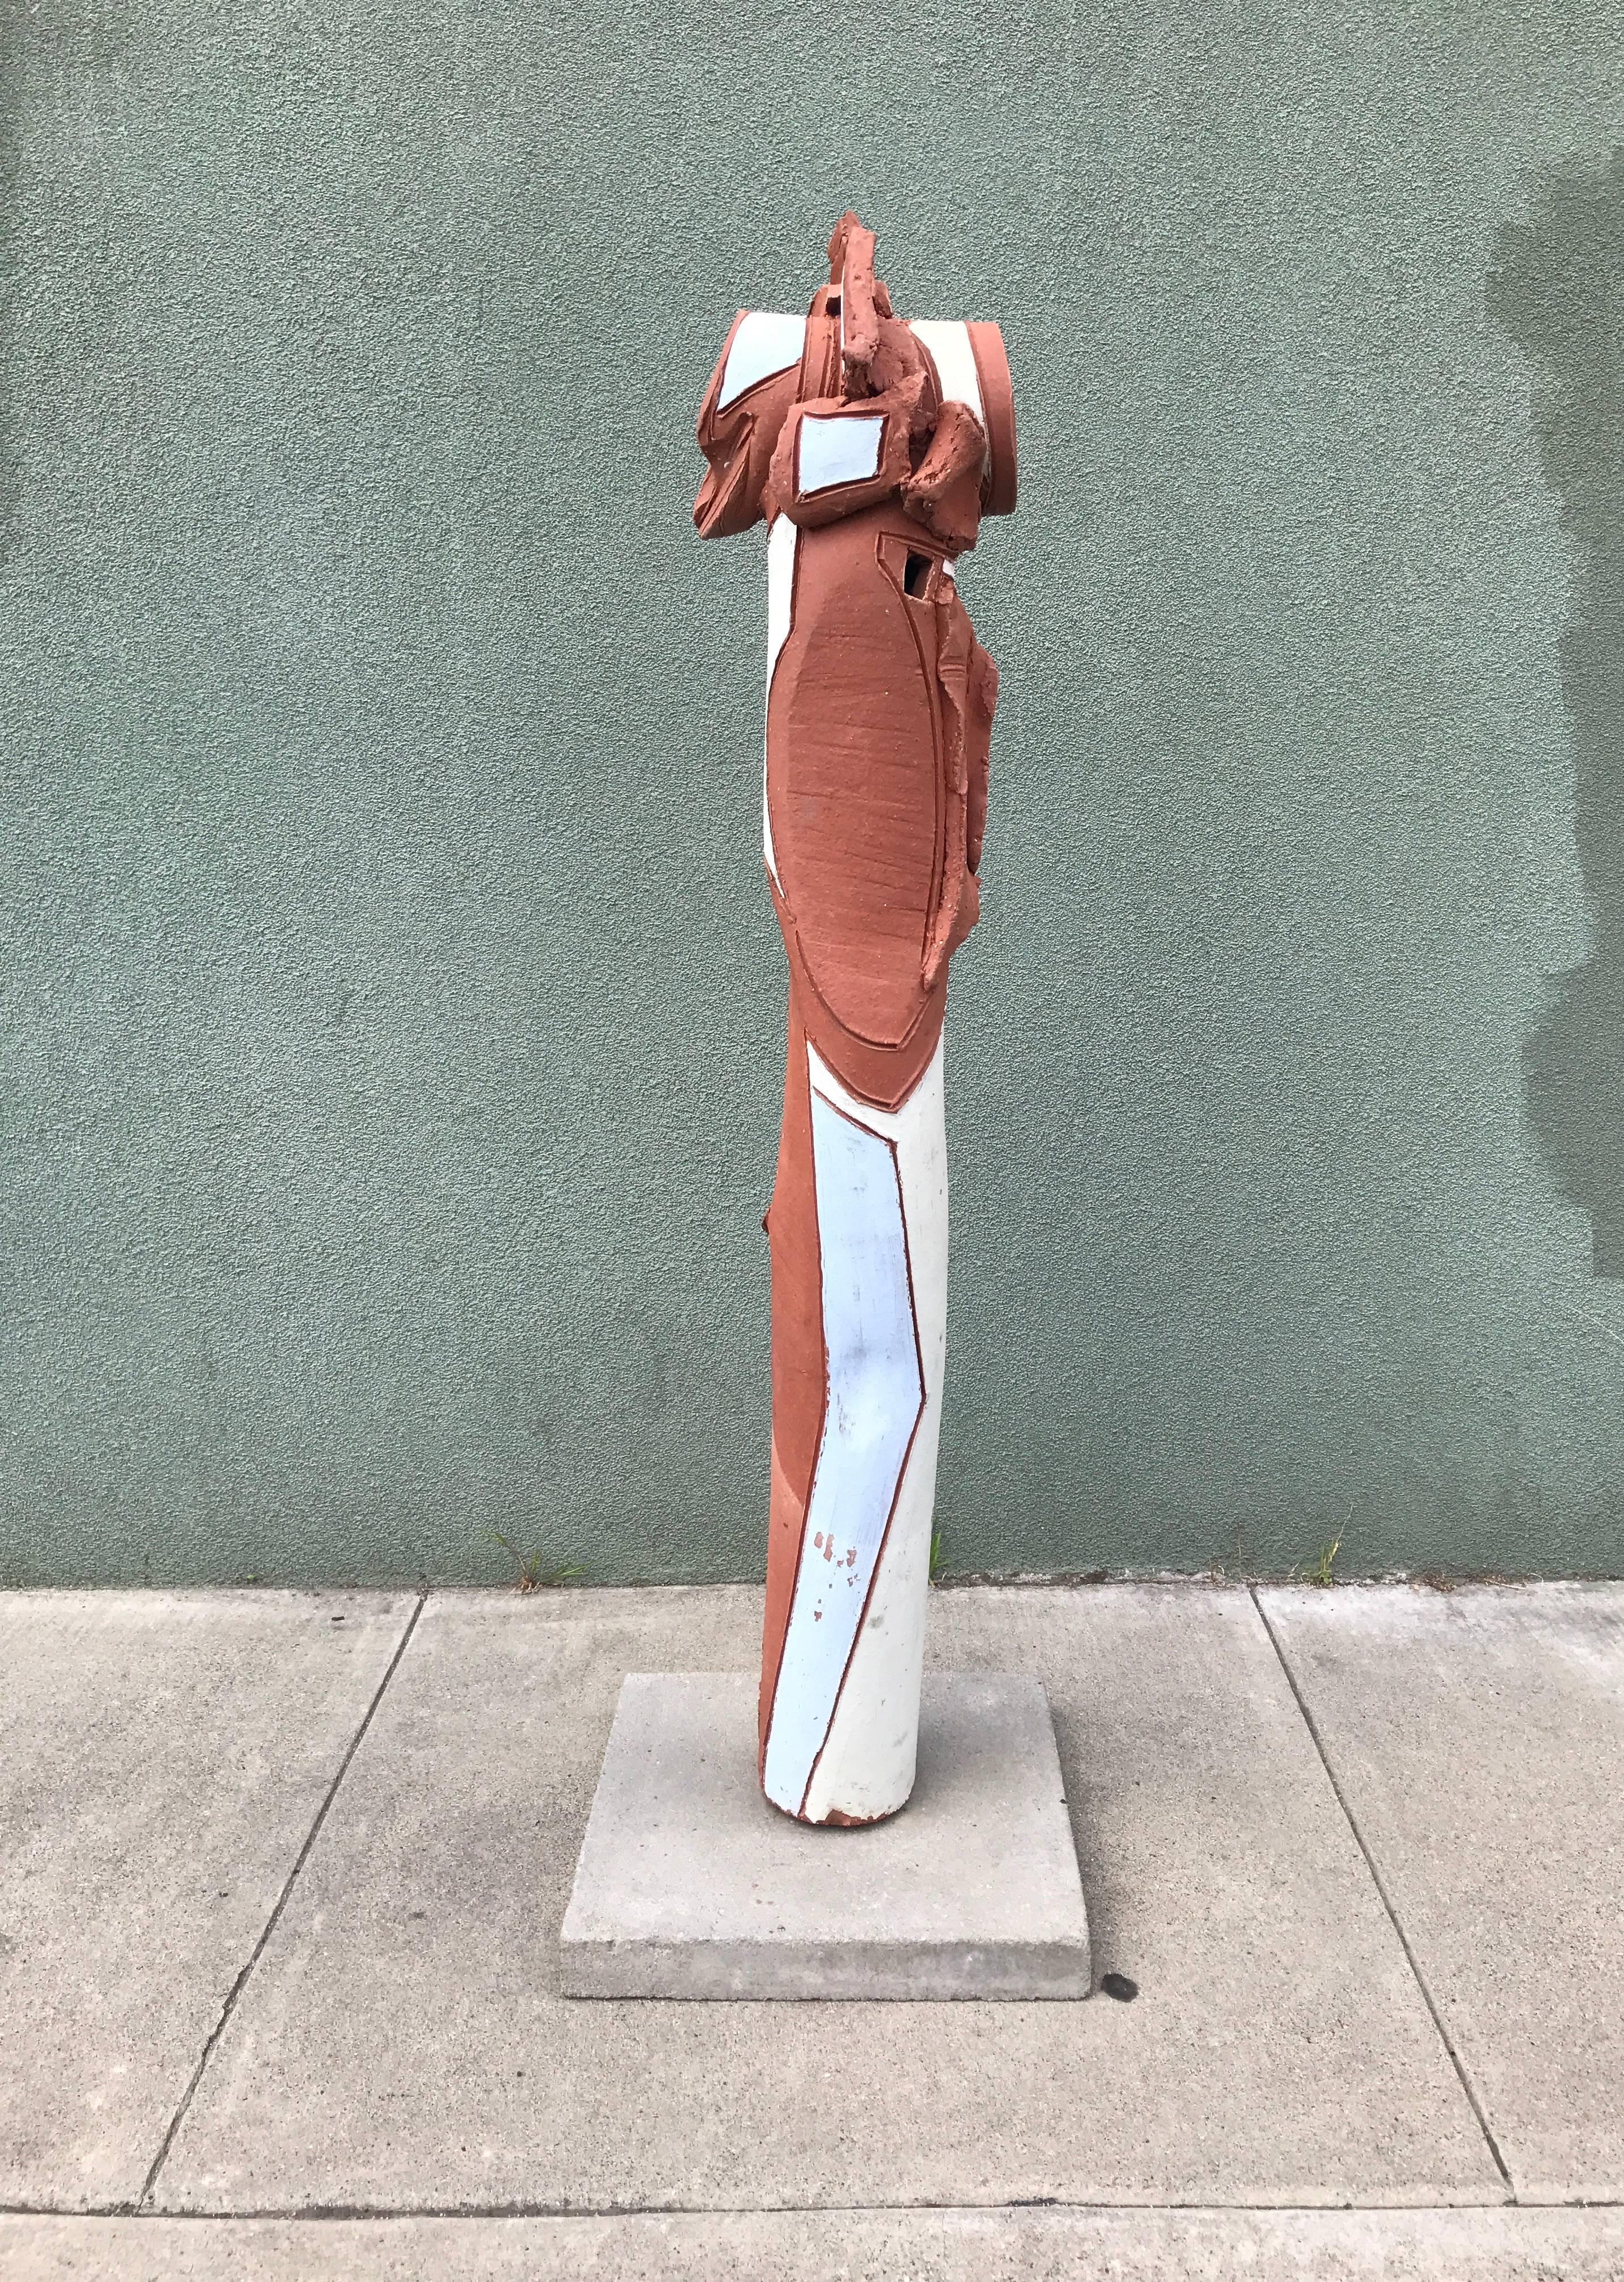 Bay Area Large Glazed Ceramic Abstract or Brutalist TOTEM Sculpture #2 For Sale 4